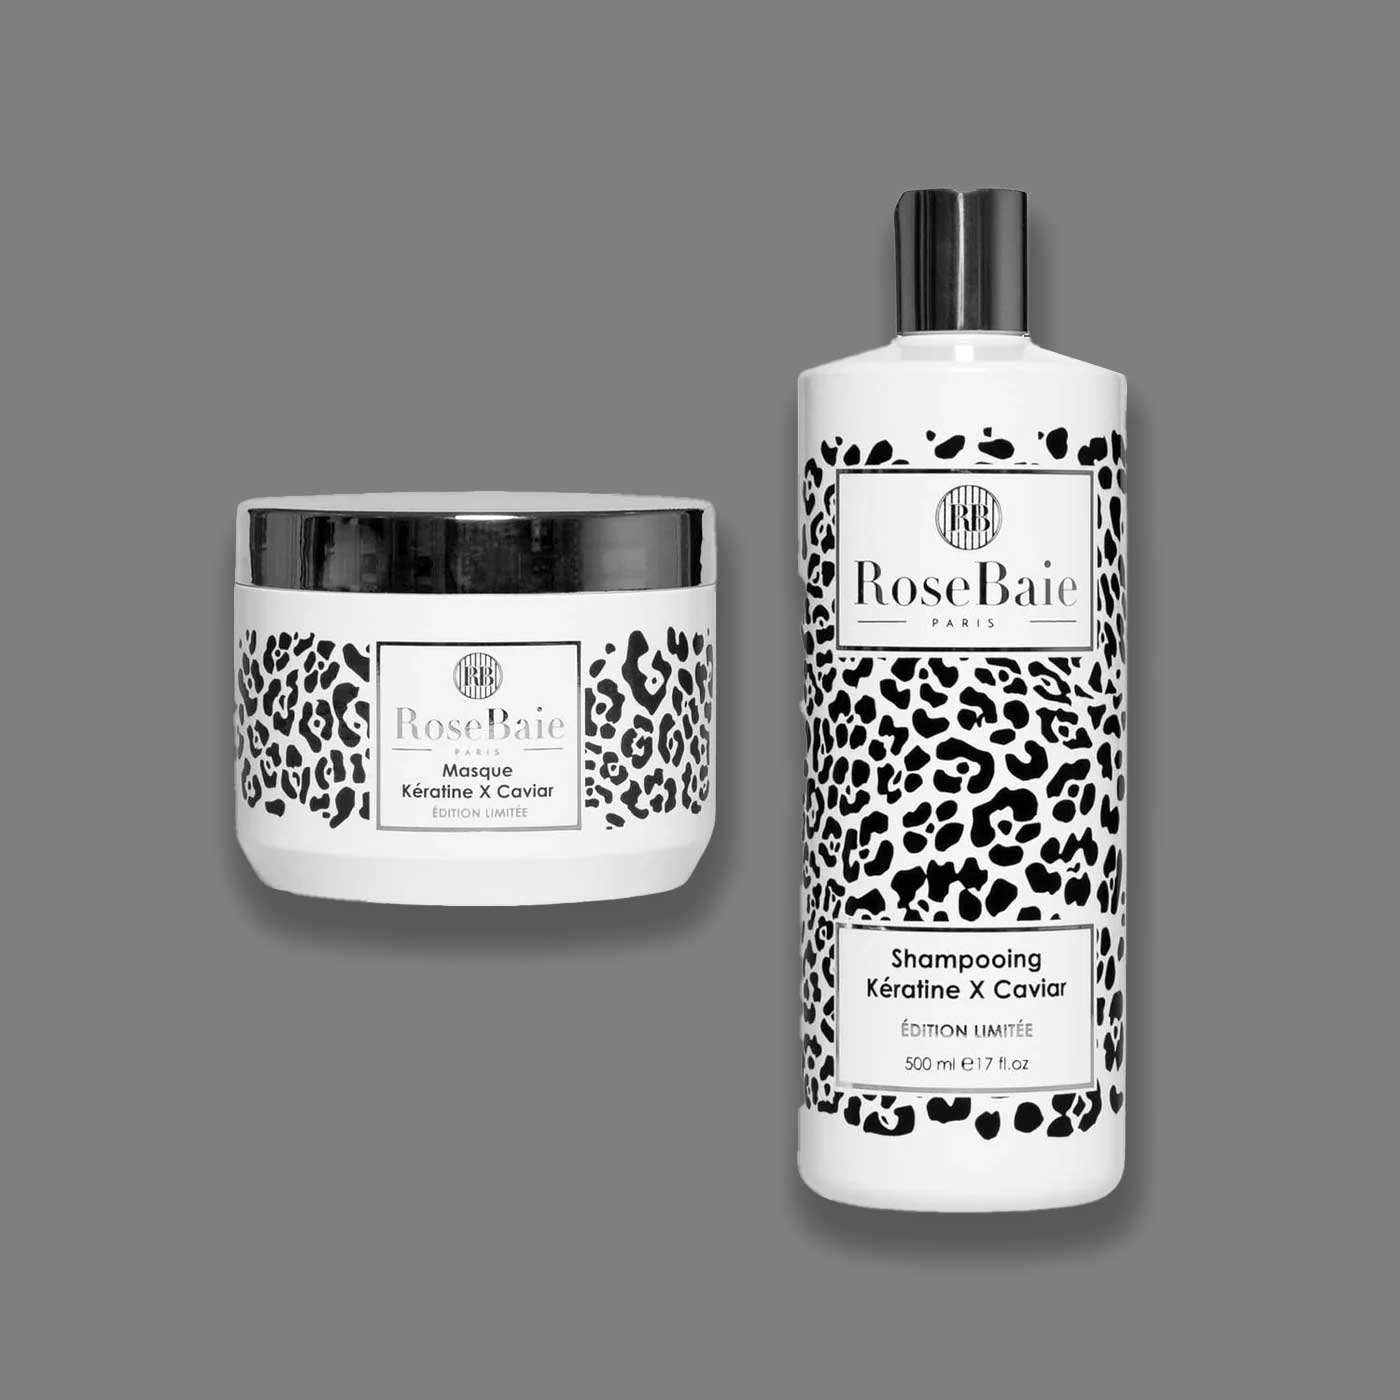 Duo soins à l'huile d'amla - Shampoing & Masque - 2 x 500 ml